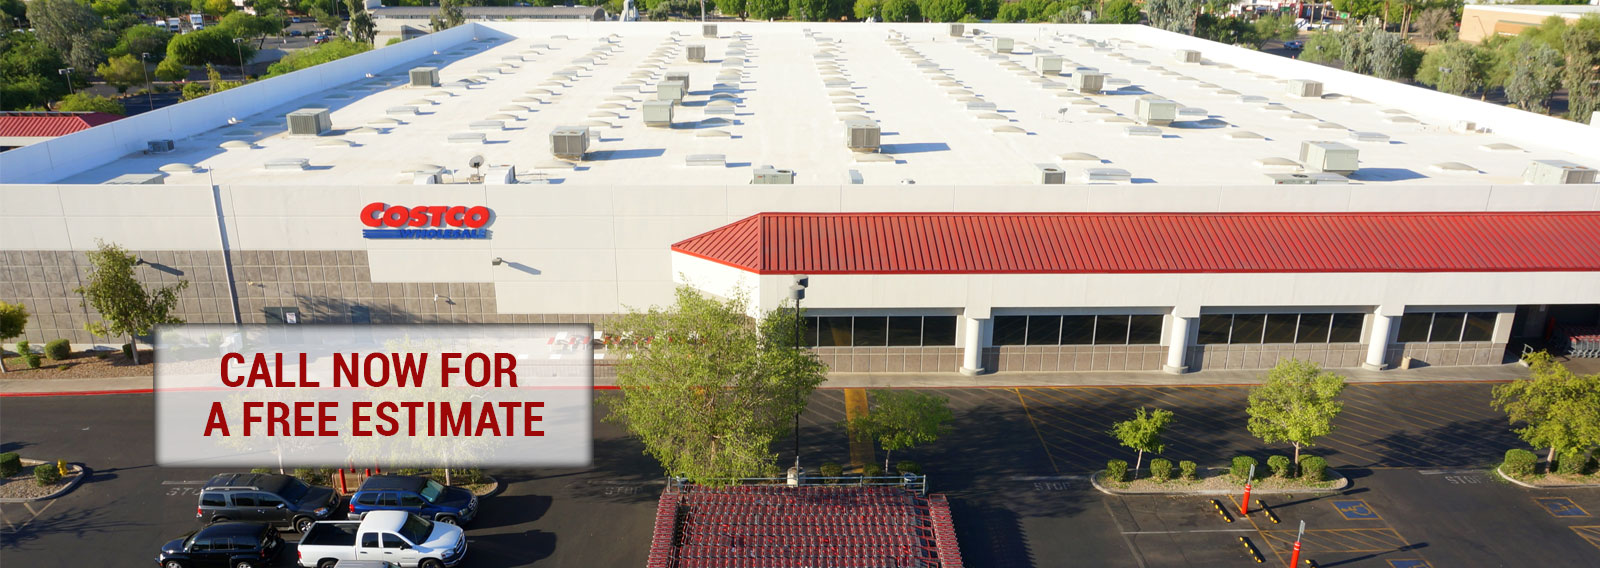 Best Roofing Companies in Arizona